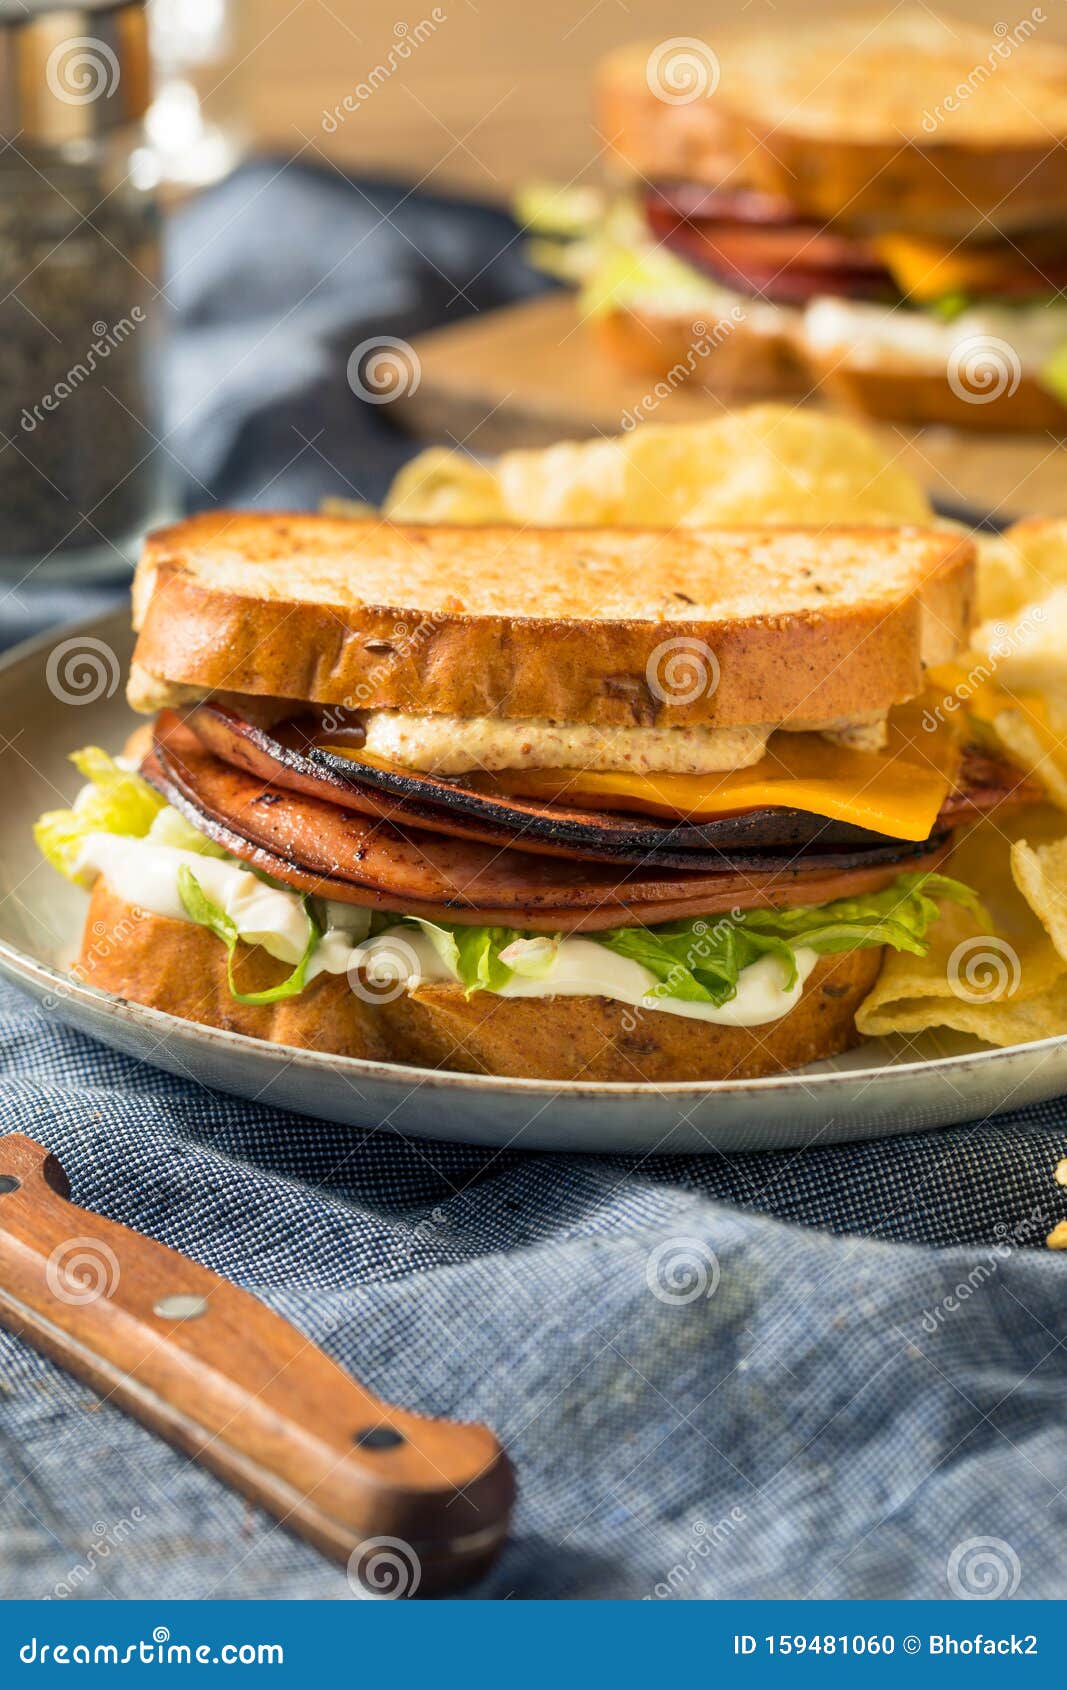 homemade fried bologna sandwich